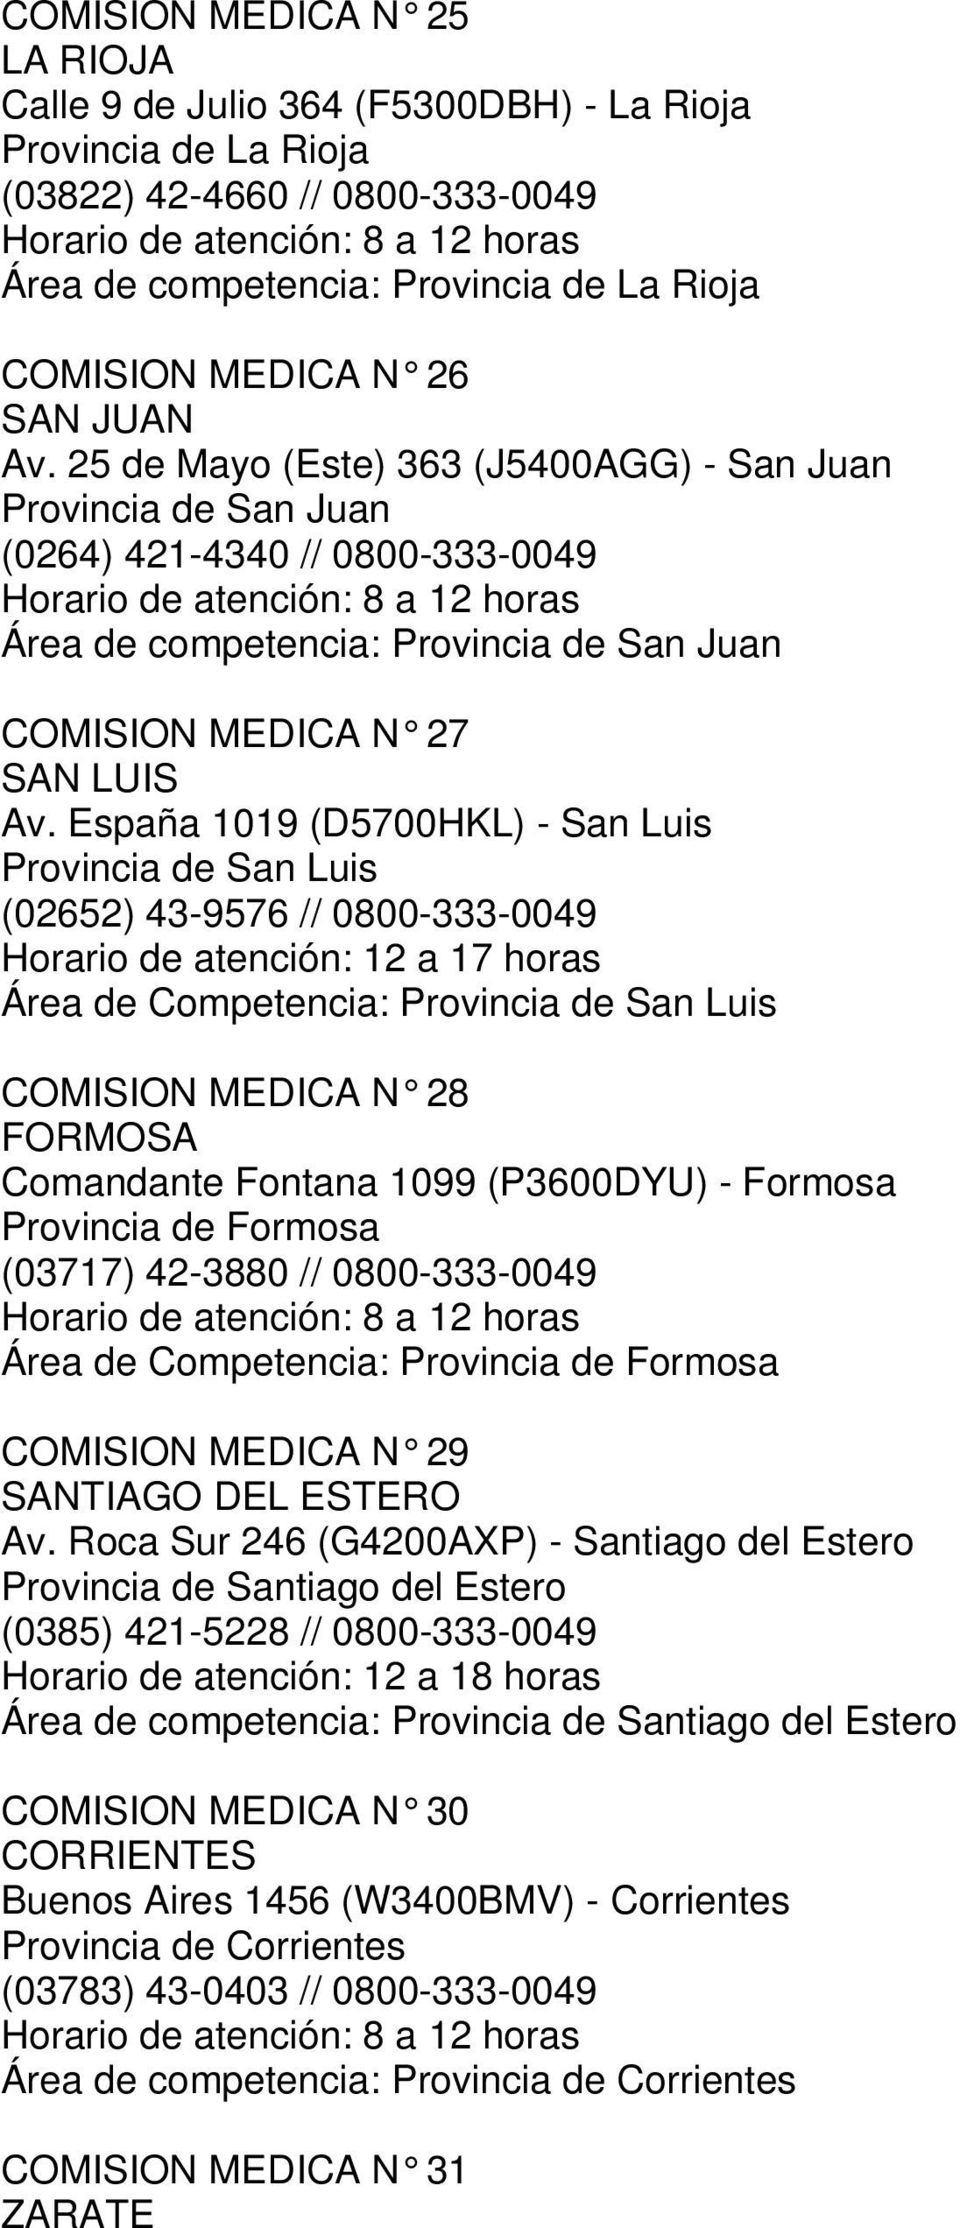 España 1019 (D5700HKL) - San Luis Provincia de San Luis (02652) 43-9576 // 0800-333-0049 Horario de atención: 12 a 17 horas Área de Competencia: Provincia de San Luis COMISION MEDICA N 28 FORMOSA